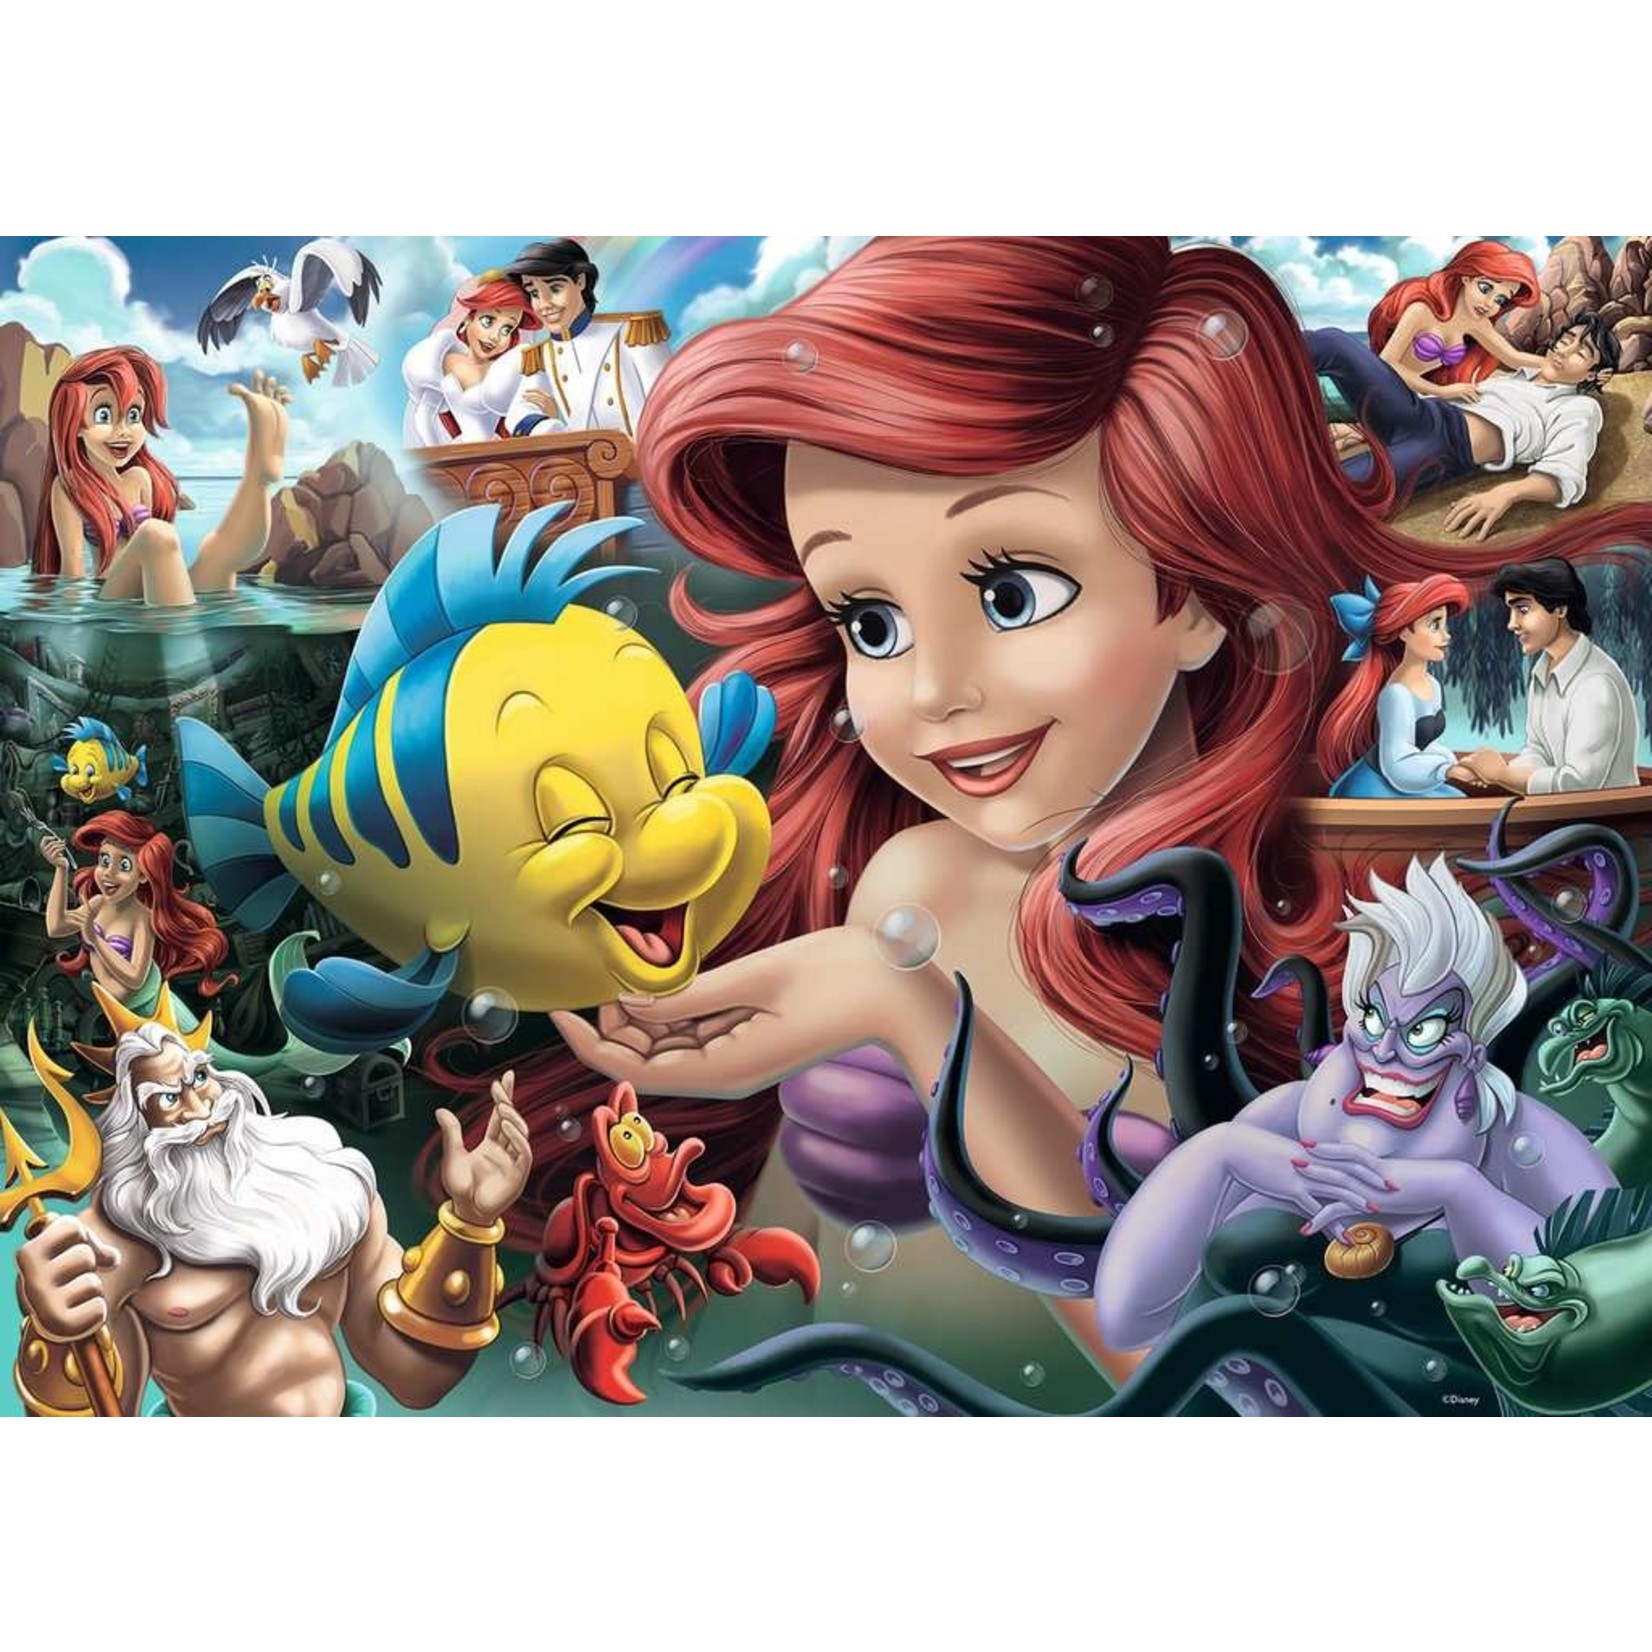 Disney Heroines - The Little Mermaid 1000 Piece Puzzle